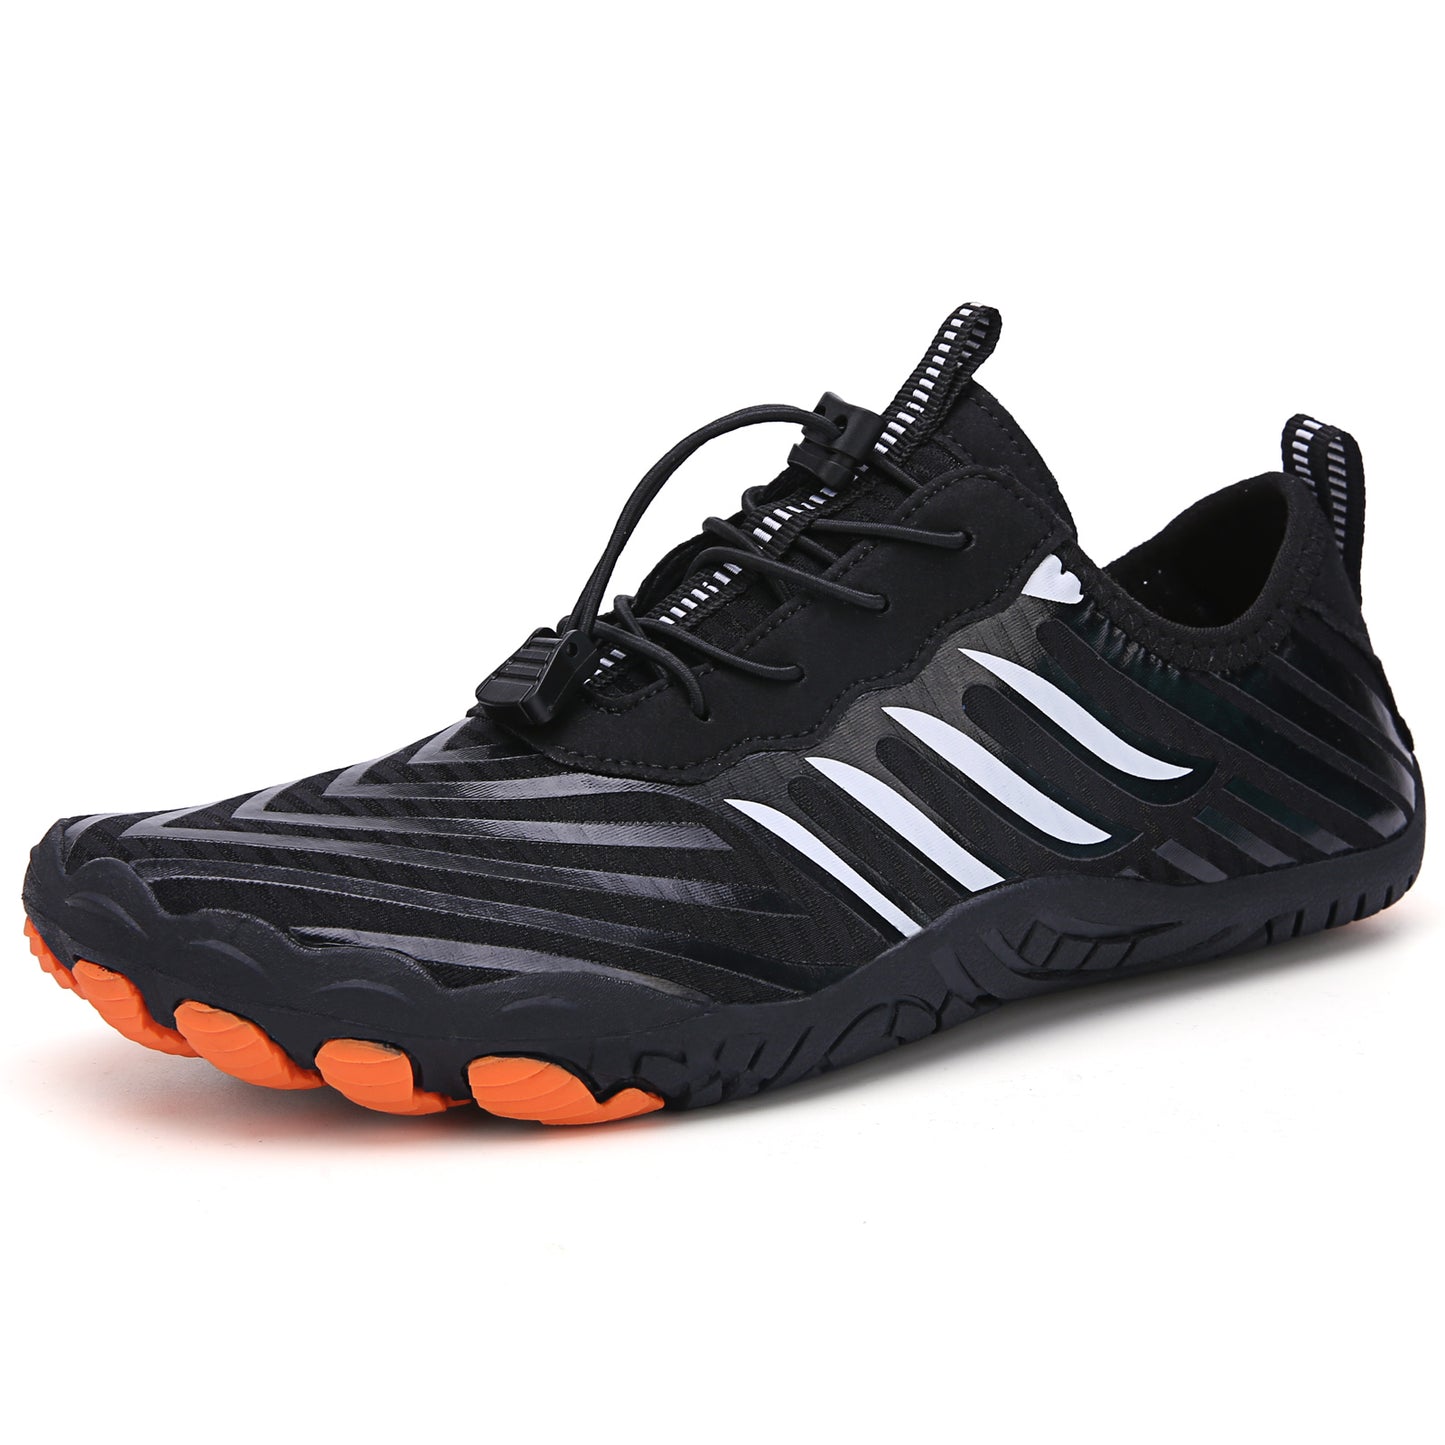 WildTrek Pro - Multi-Terrain Adaptive, Non-Slip & Durable Barefoot Shoes (Unisex)